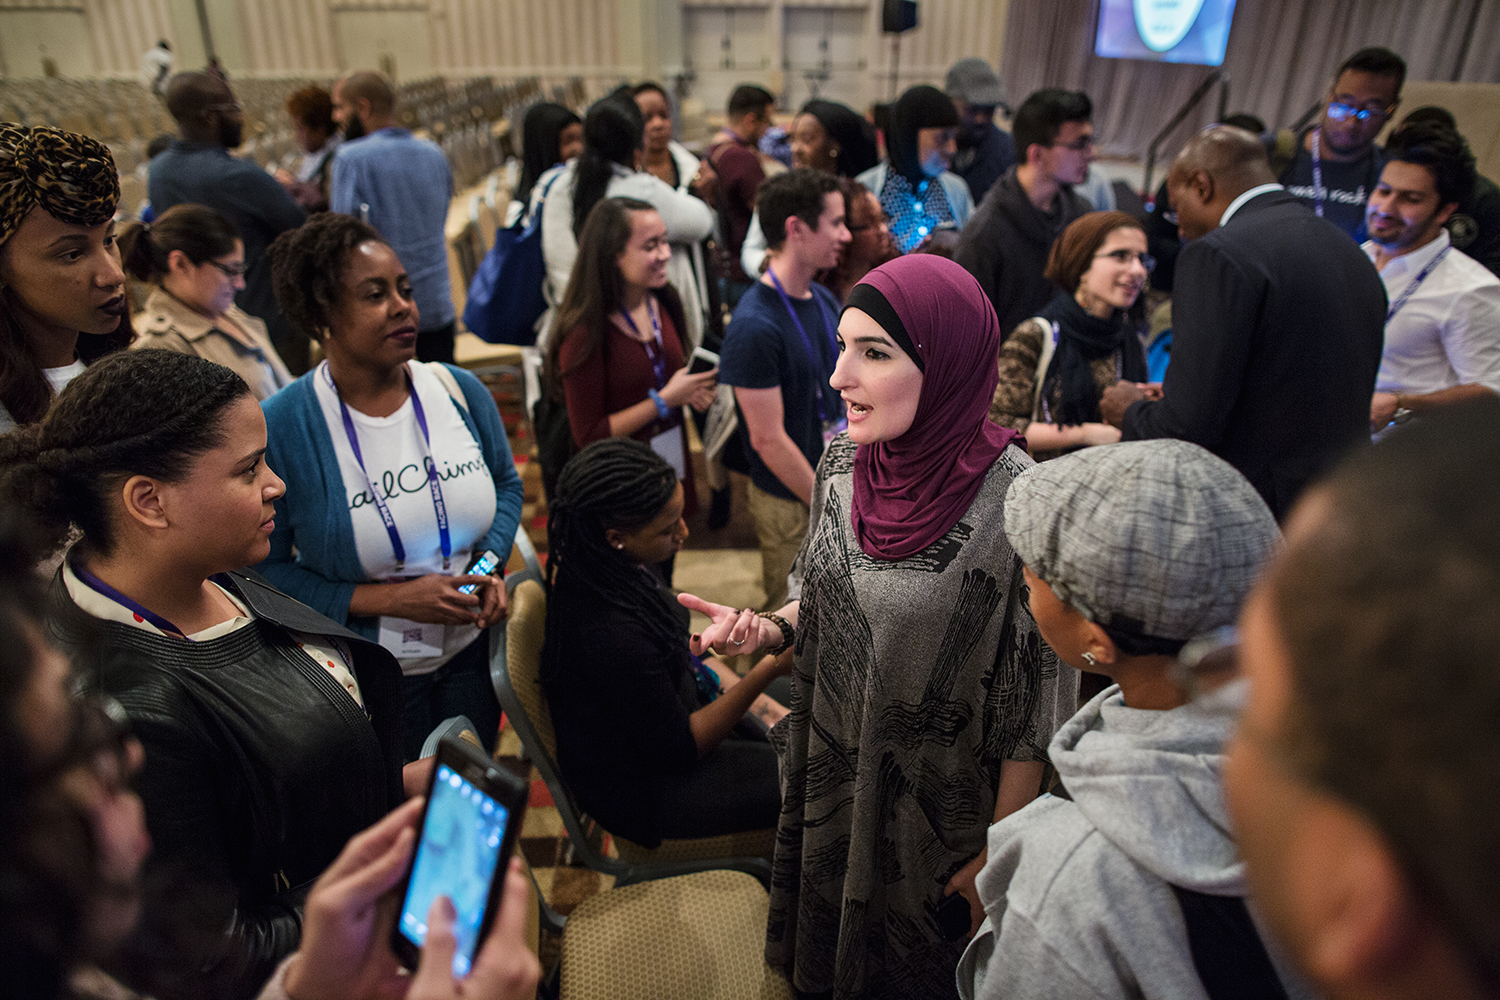  Linda Sarsour speaks to conference attendees after Facing Race 2016 plenary session, Atlanta, GA, 12 November 